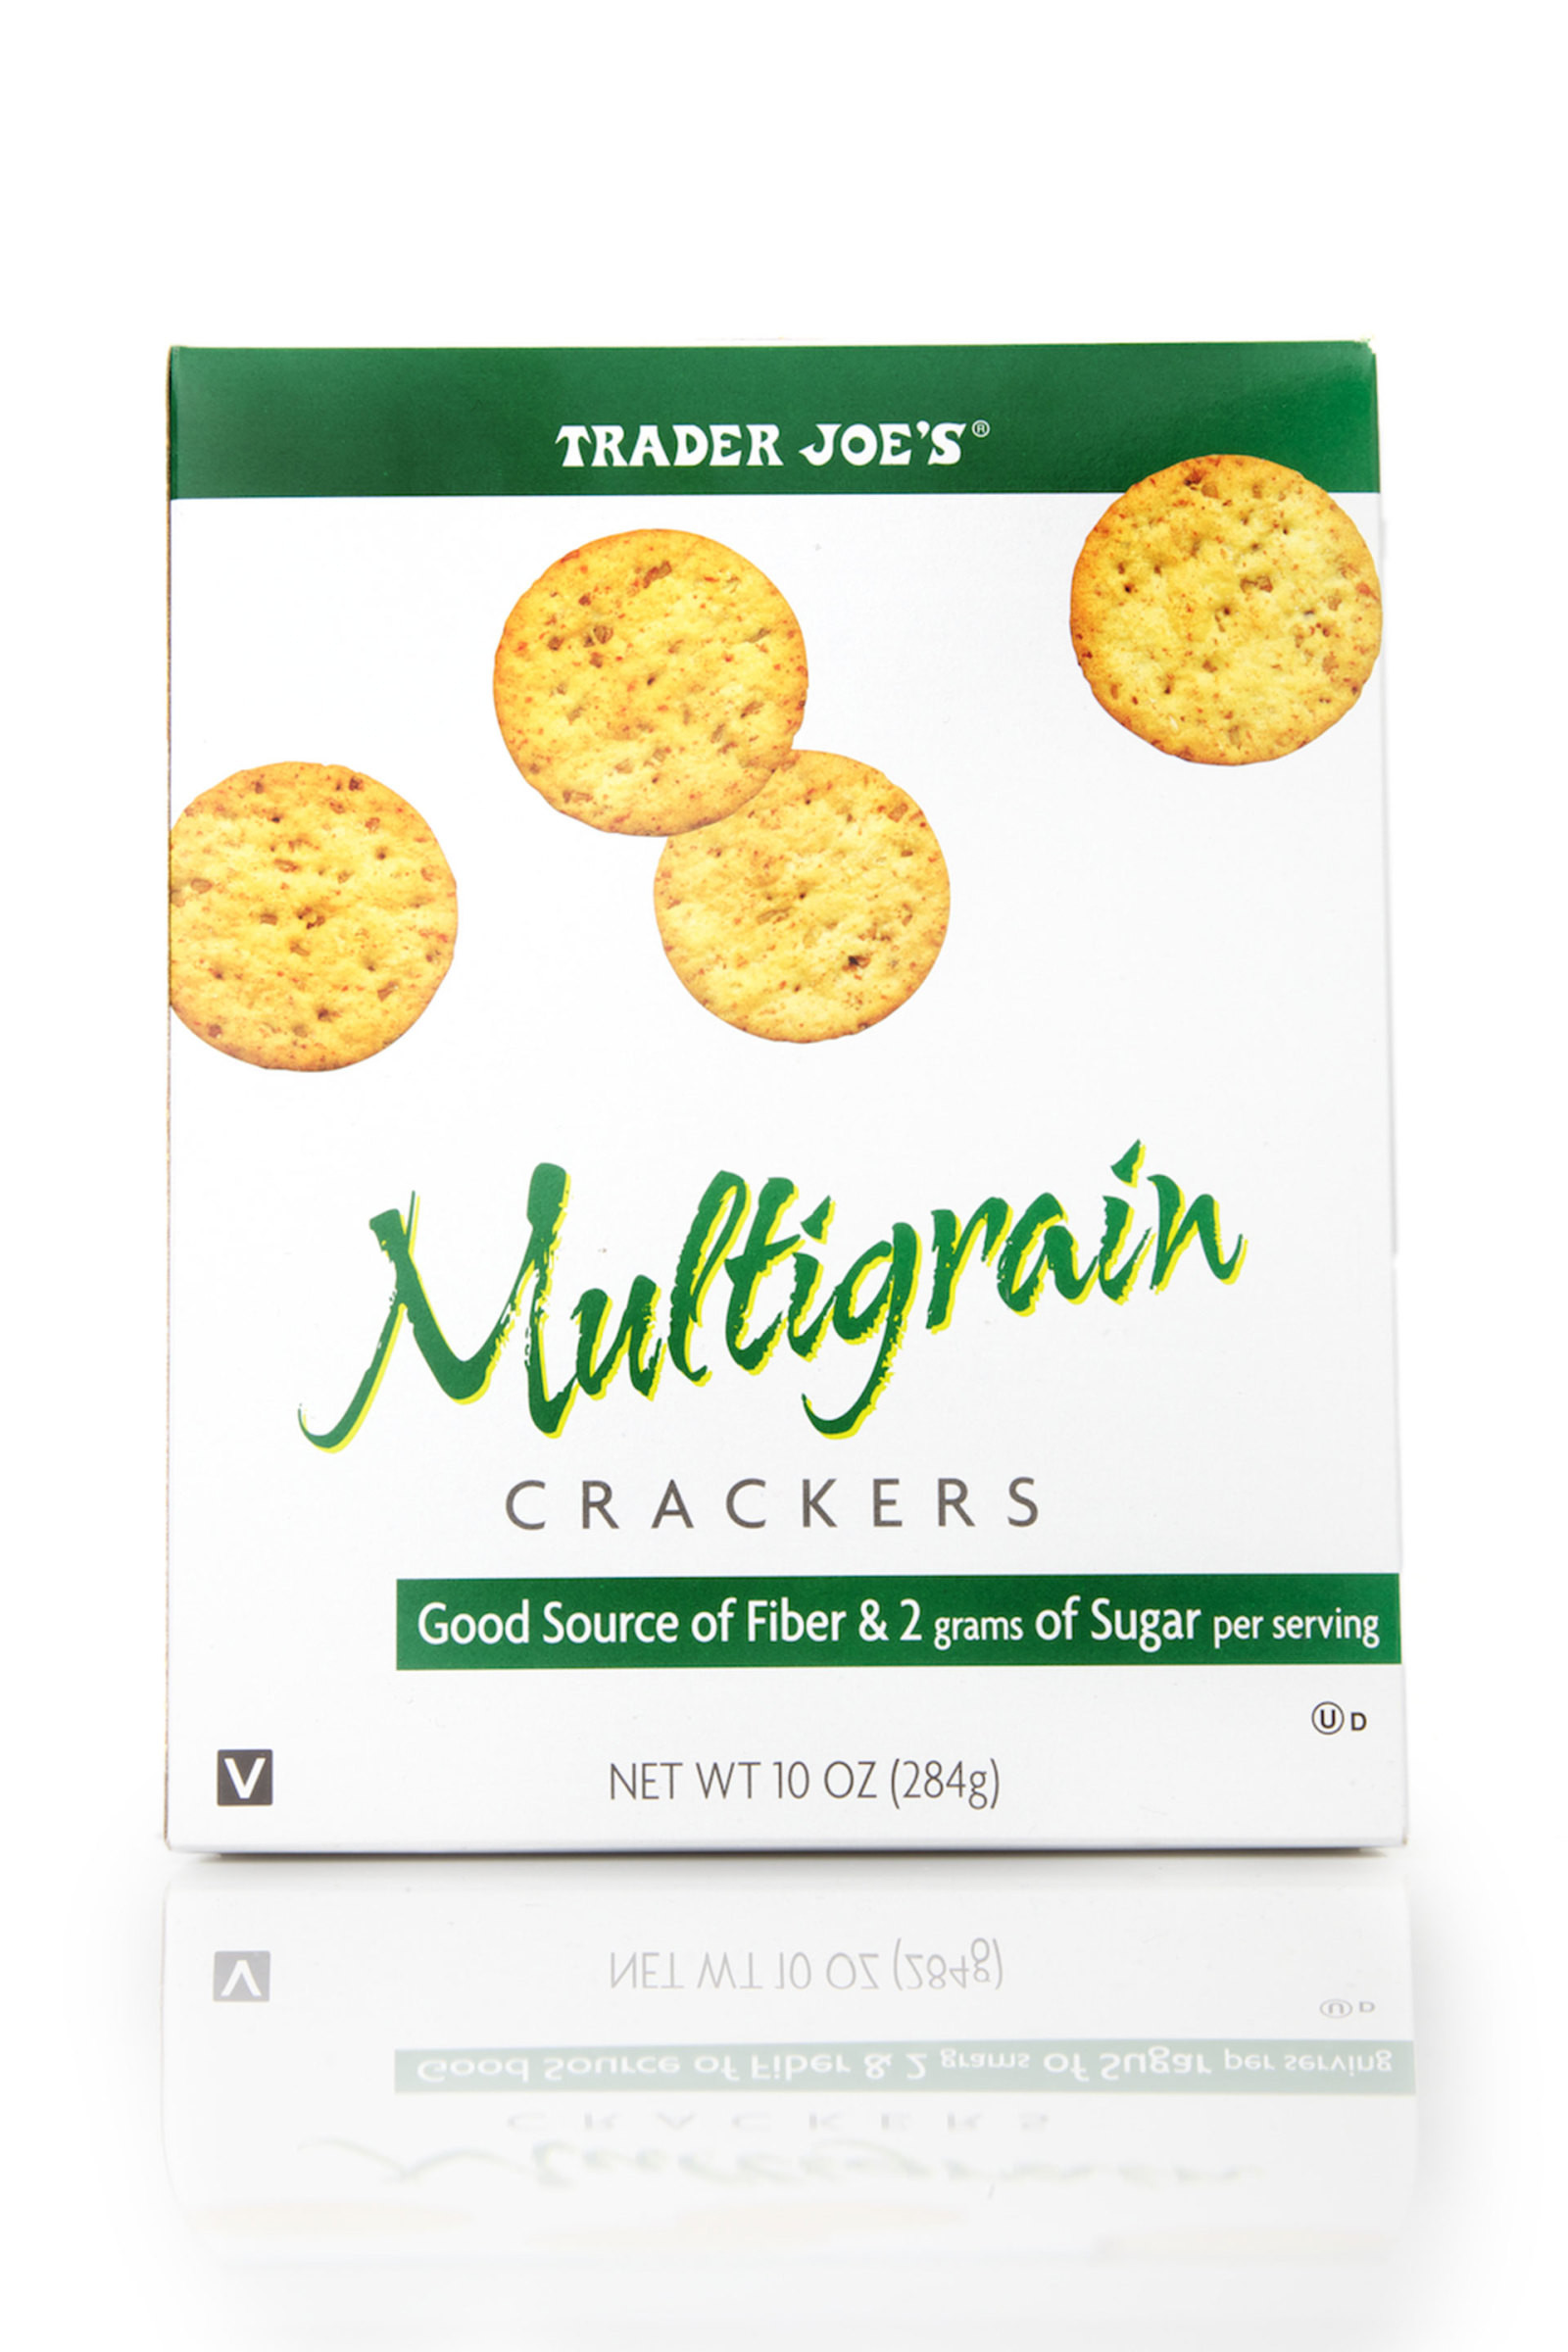 Trader Joe'S Multigrain Crackers
 The 25 Best Ideas for Trader Joe s Multigrain Crackers